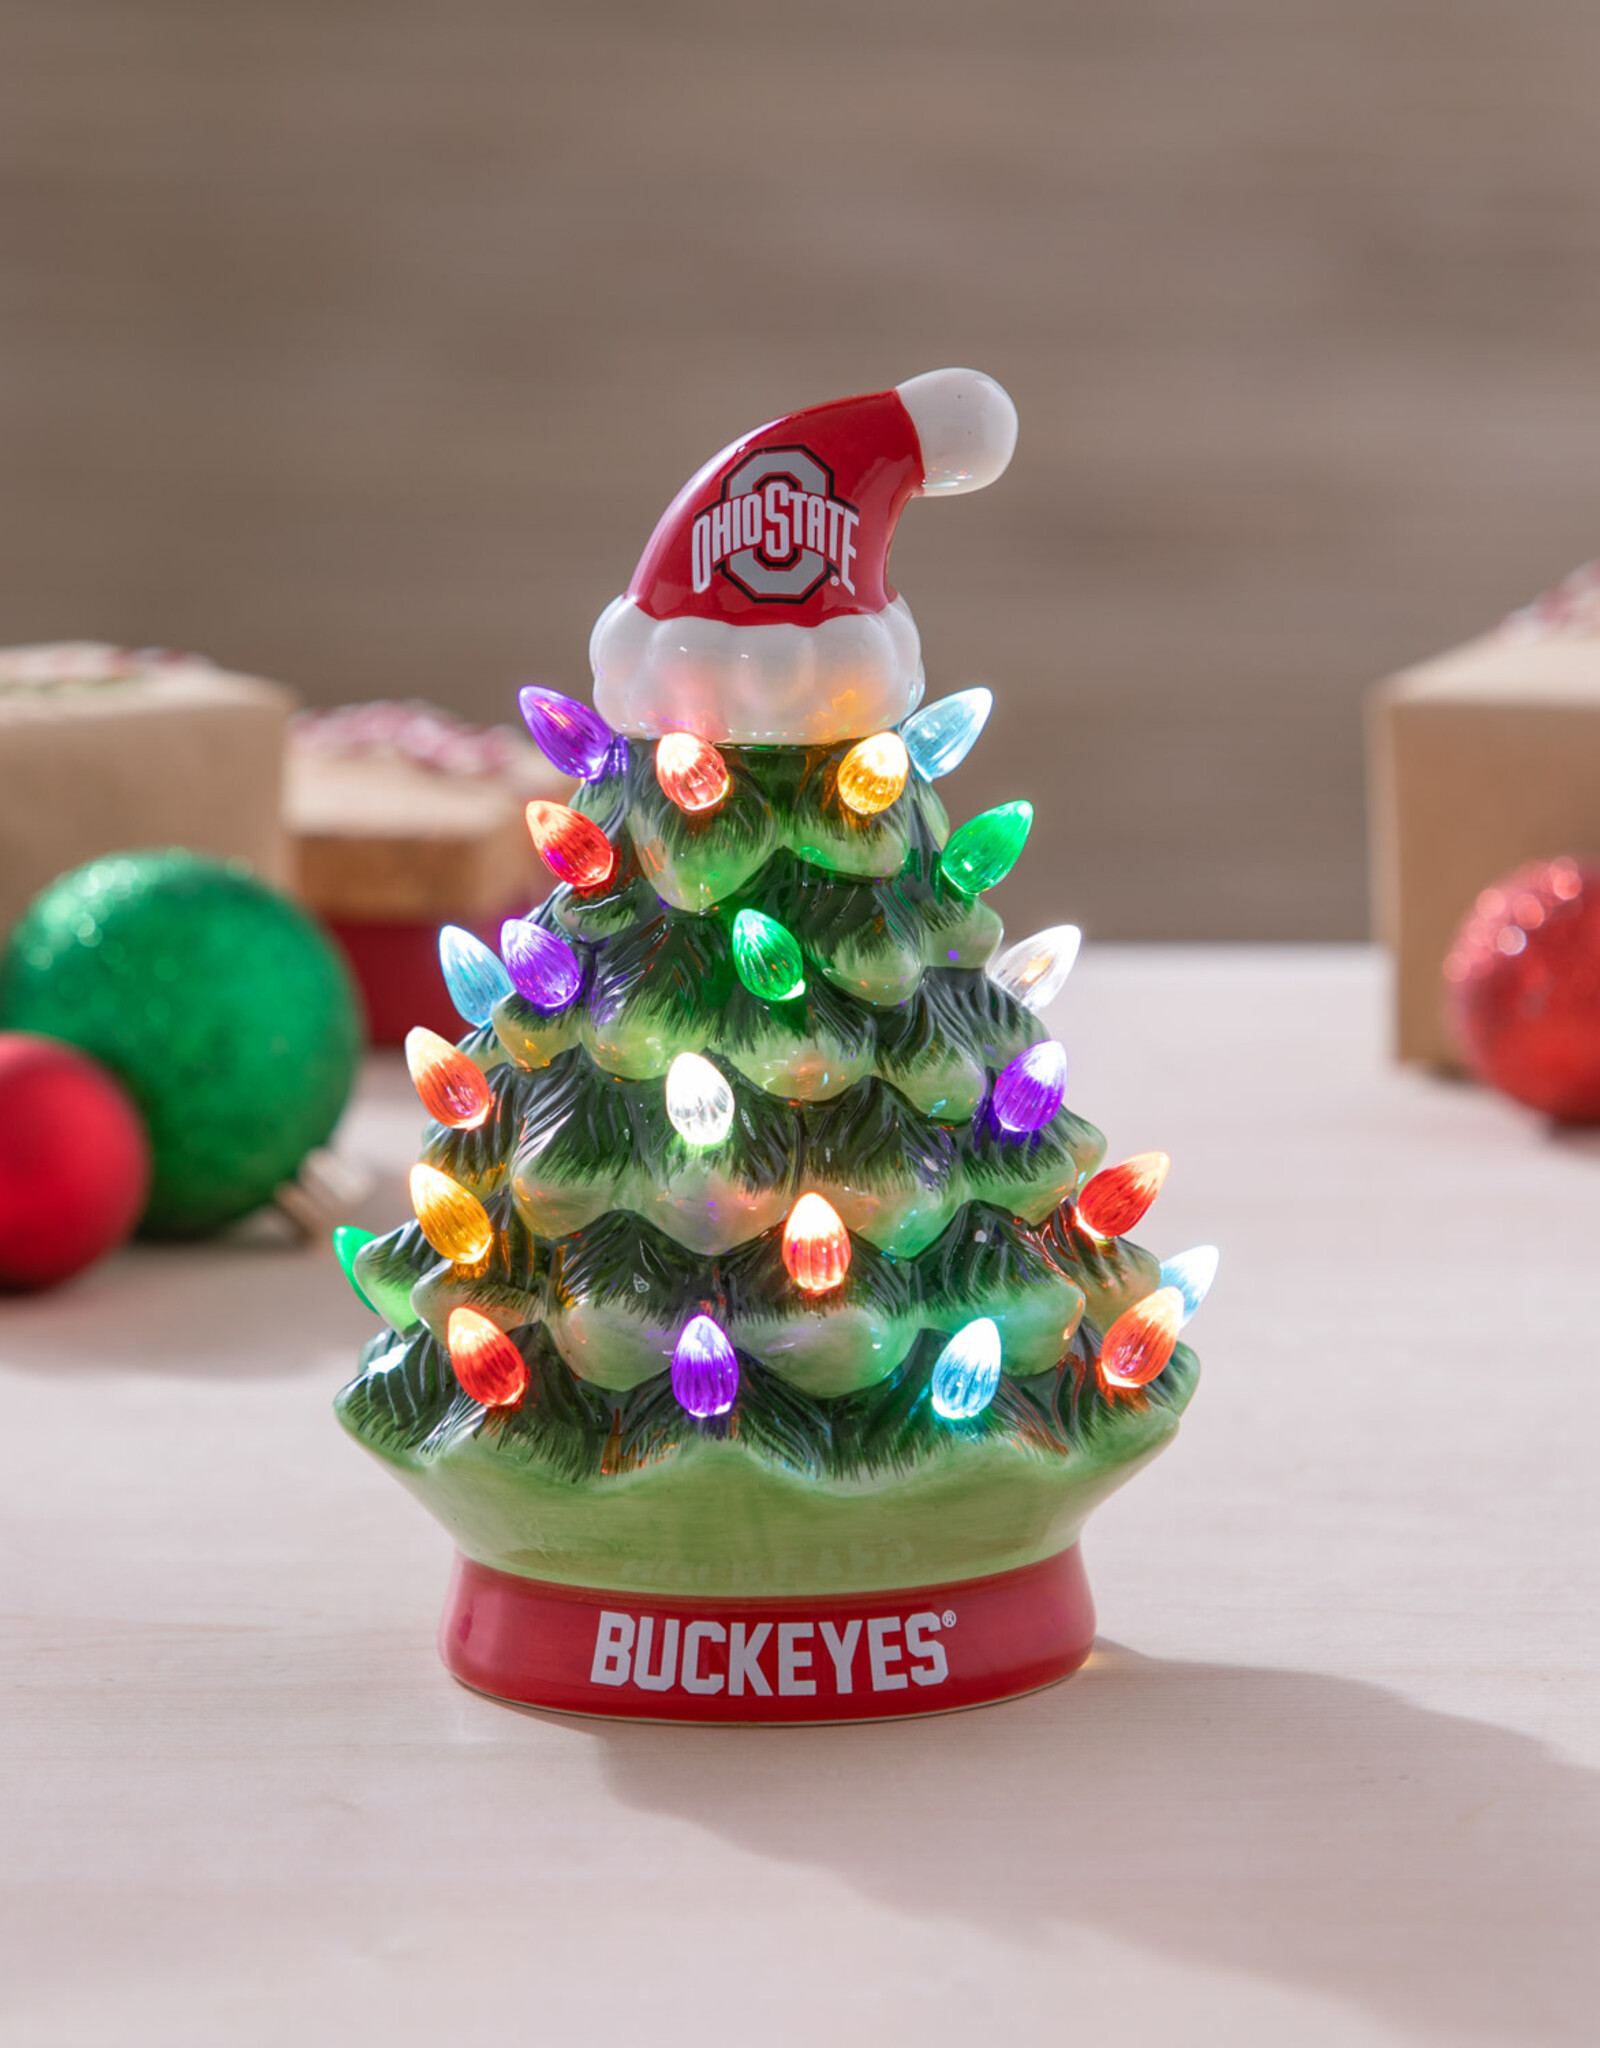 EVERGREEN Ohio State Buckeyes 8" LED Lighted Ceramic Tree